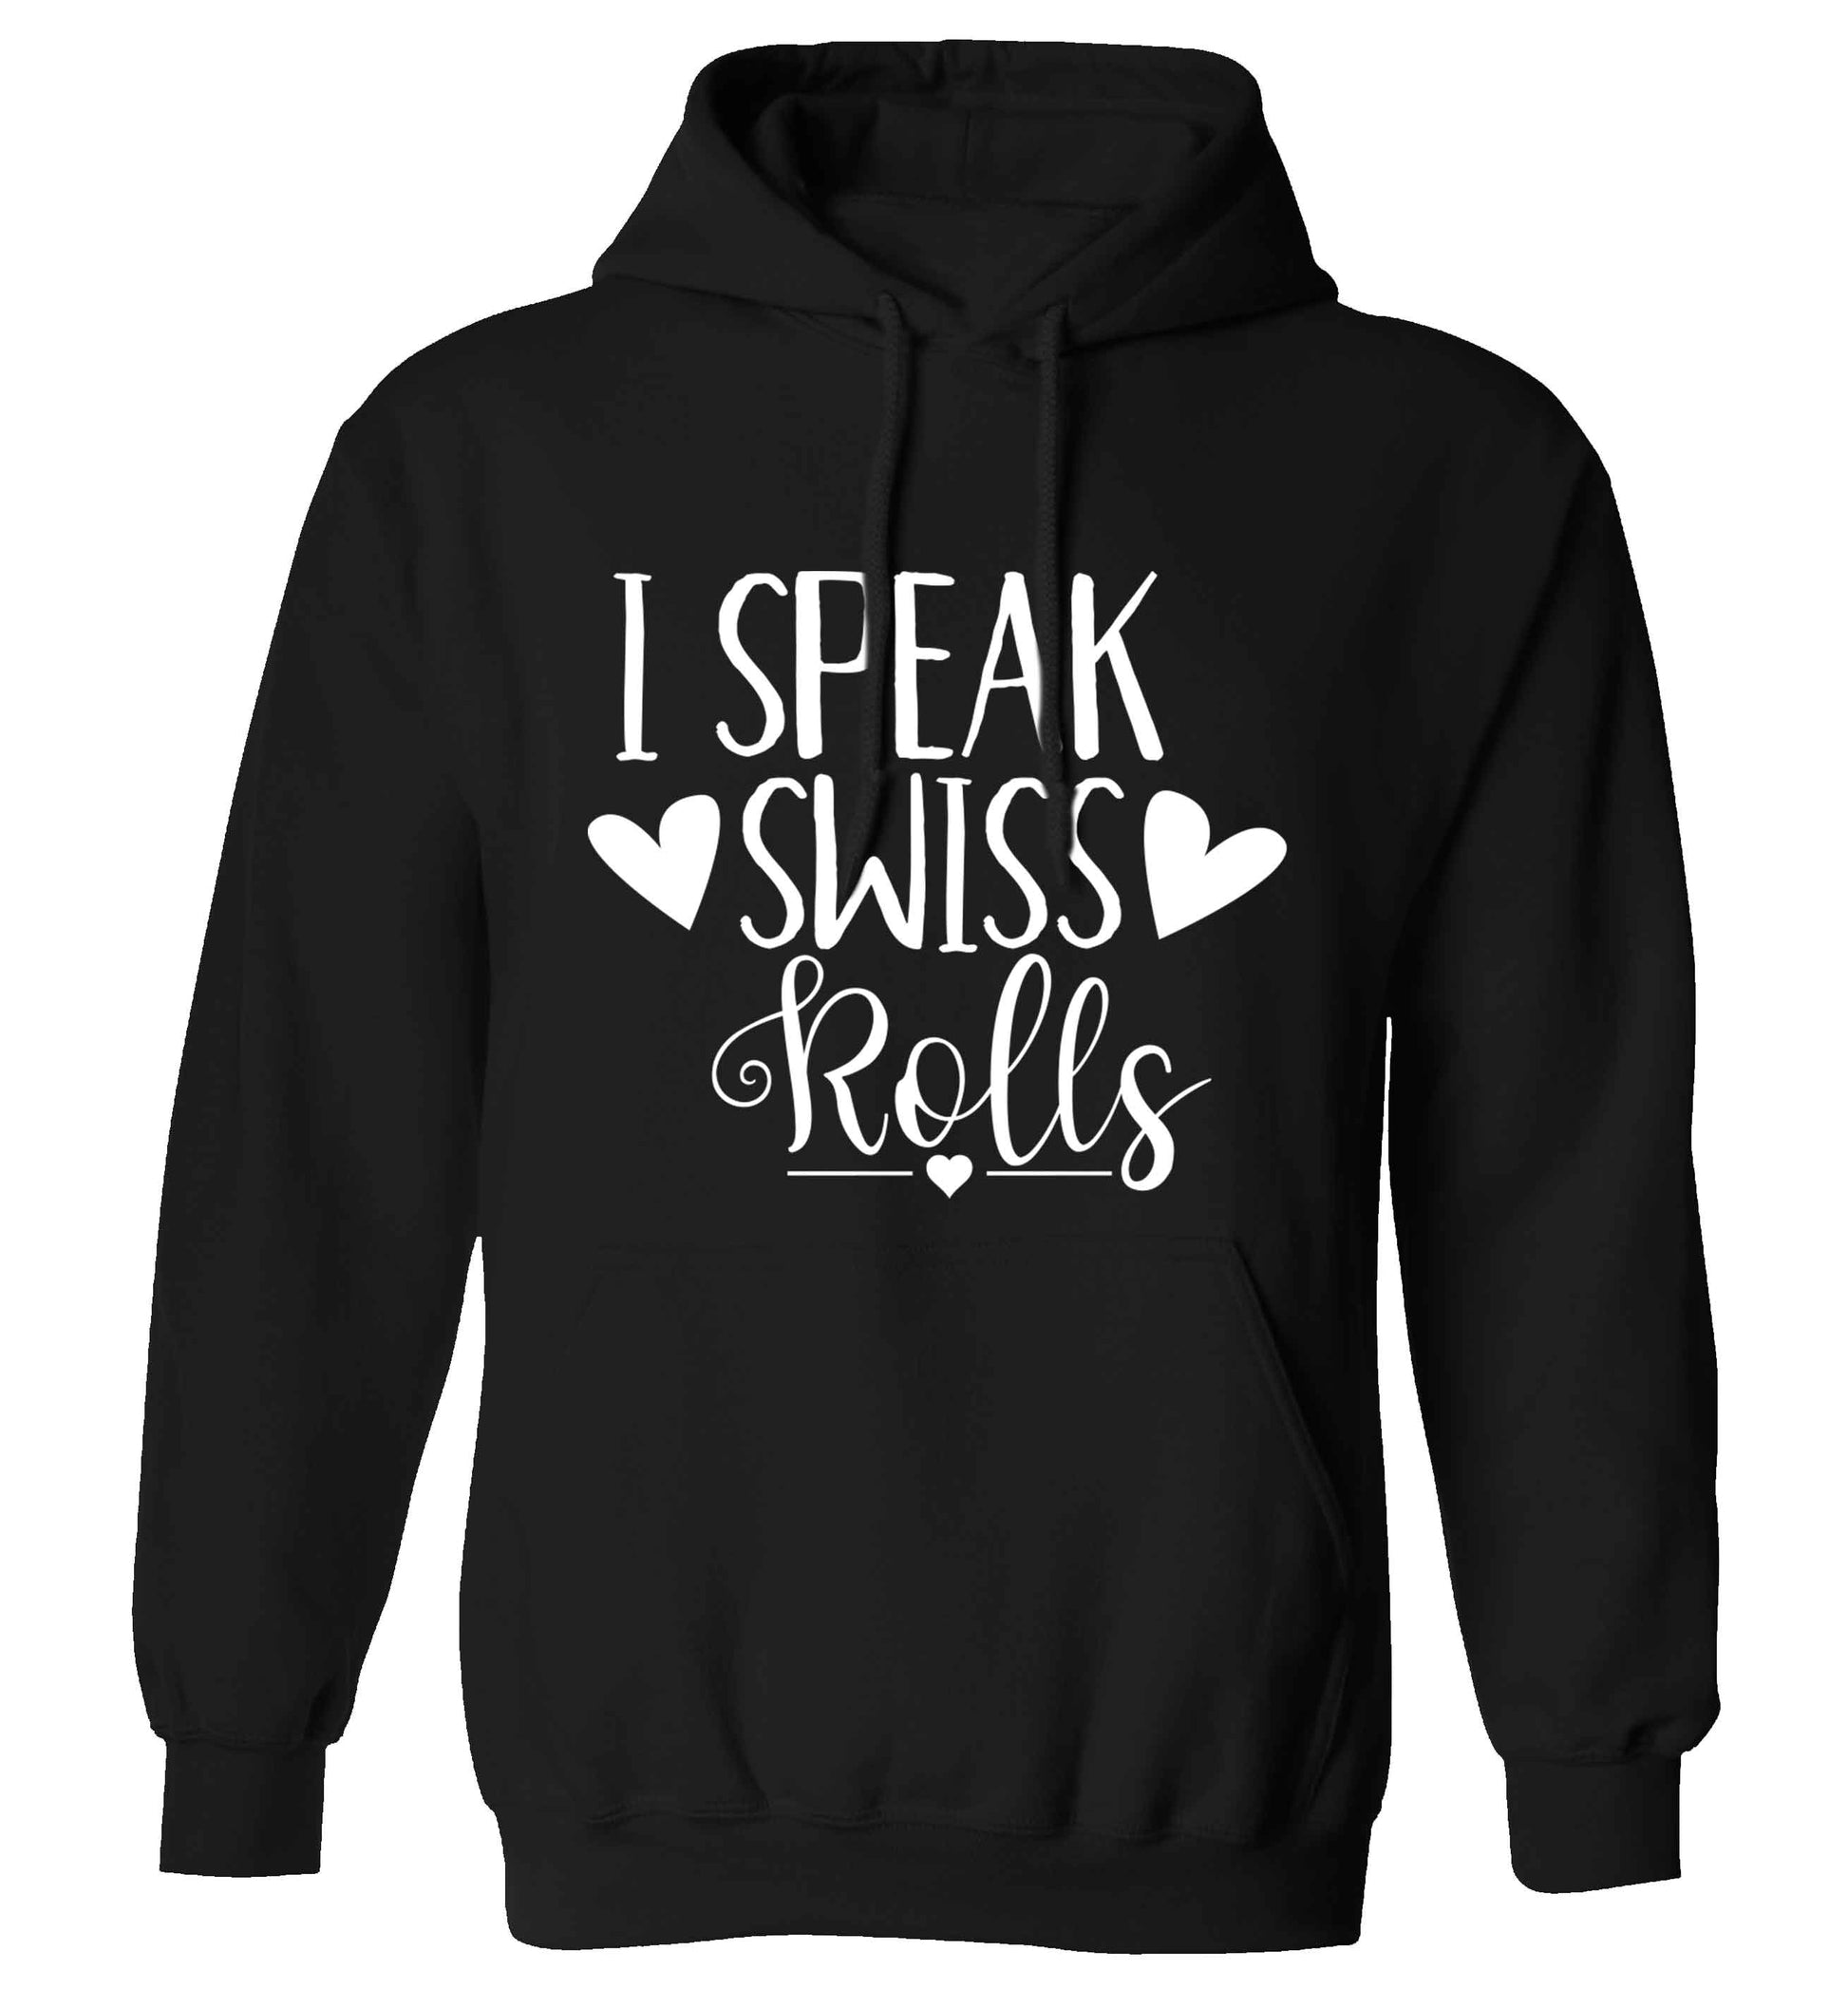 I speak swiss..rolls adults unisex black hoodie 2XL